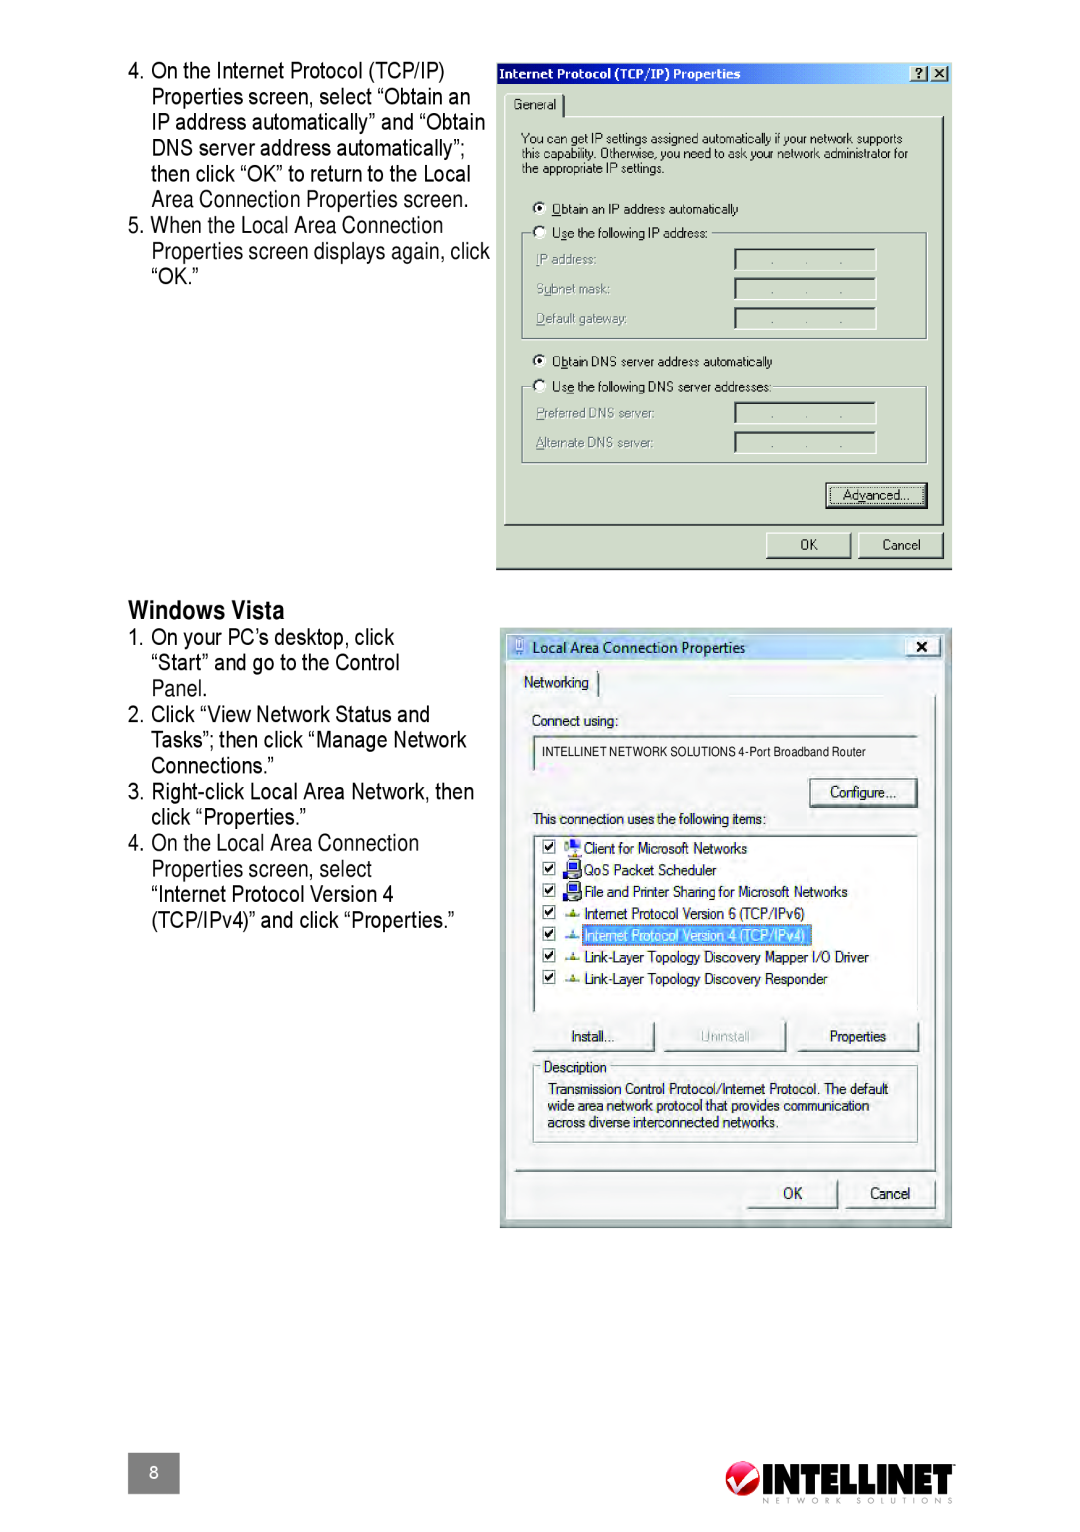 Intellinet Network Solutions 524537 user manual Windows Vista, Area Connection Properties screen, “Ok.”, Panel 